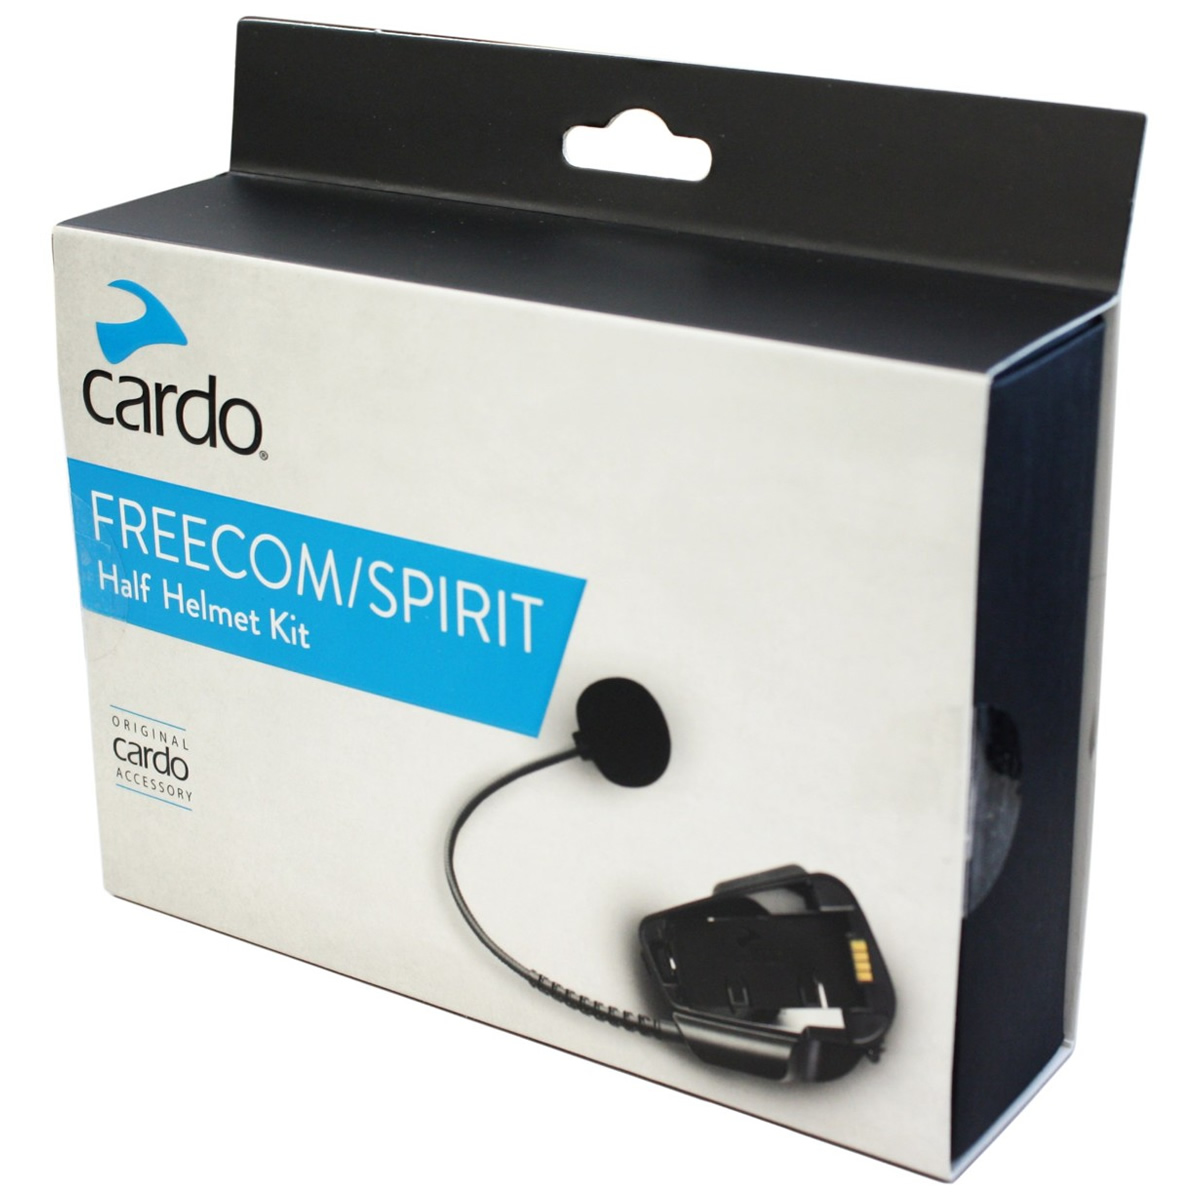 Cardo Mikrofon-Kit für Freecom/Spirit